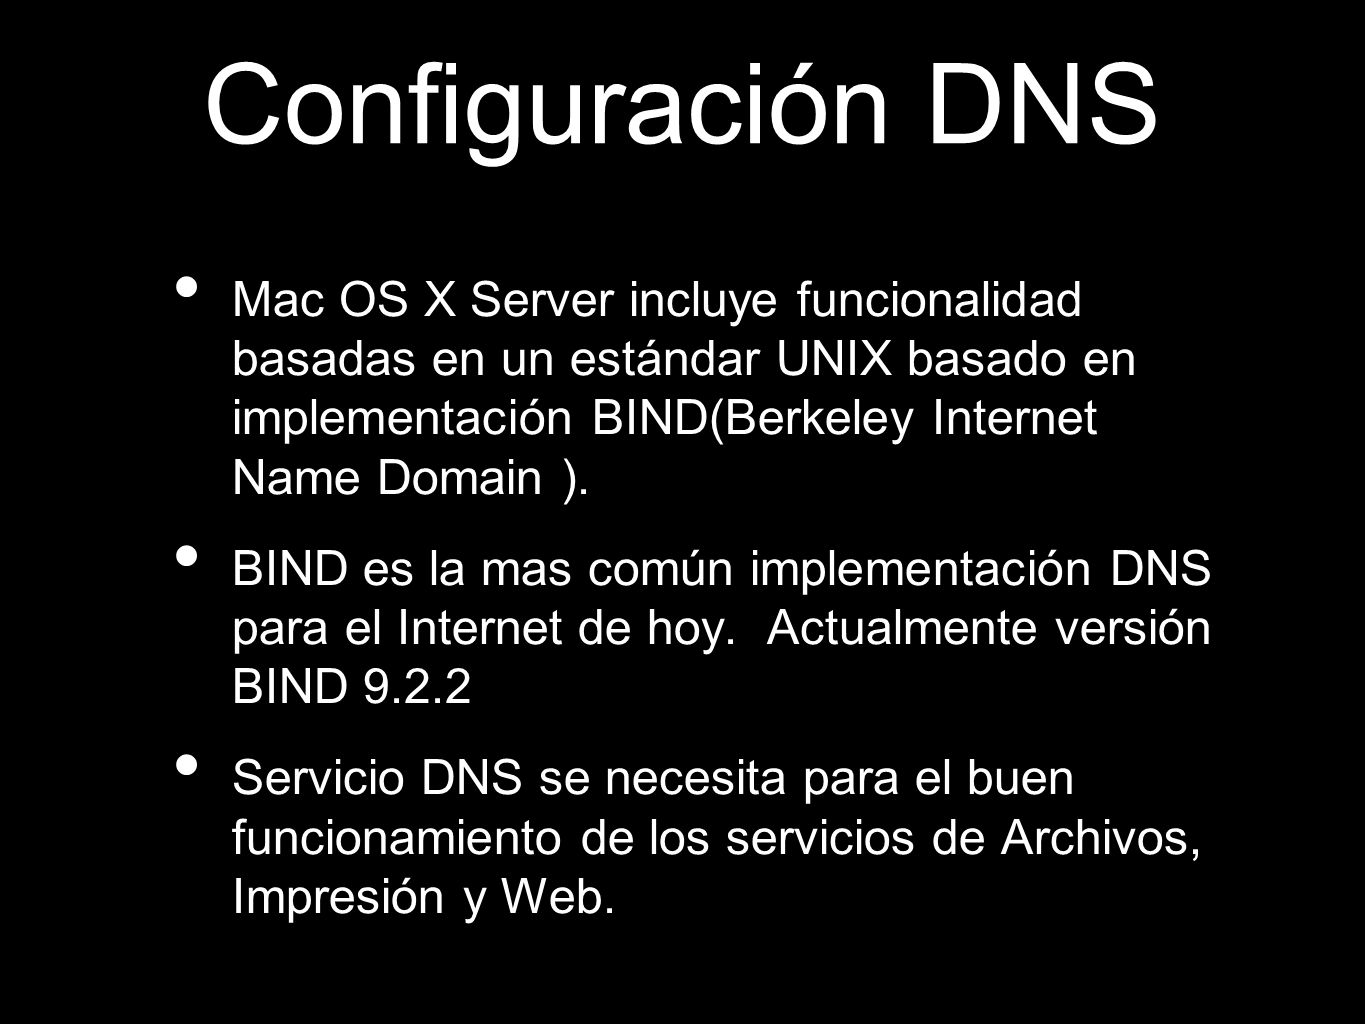 Configuración DNS Mac OS X Server incluye funcionalidad basadas en un estándar UNIX basado en implementación BIND(Berkeley Internet Name Domain ).